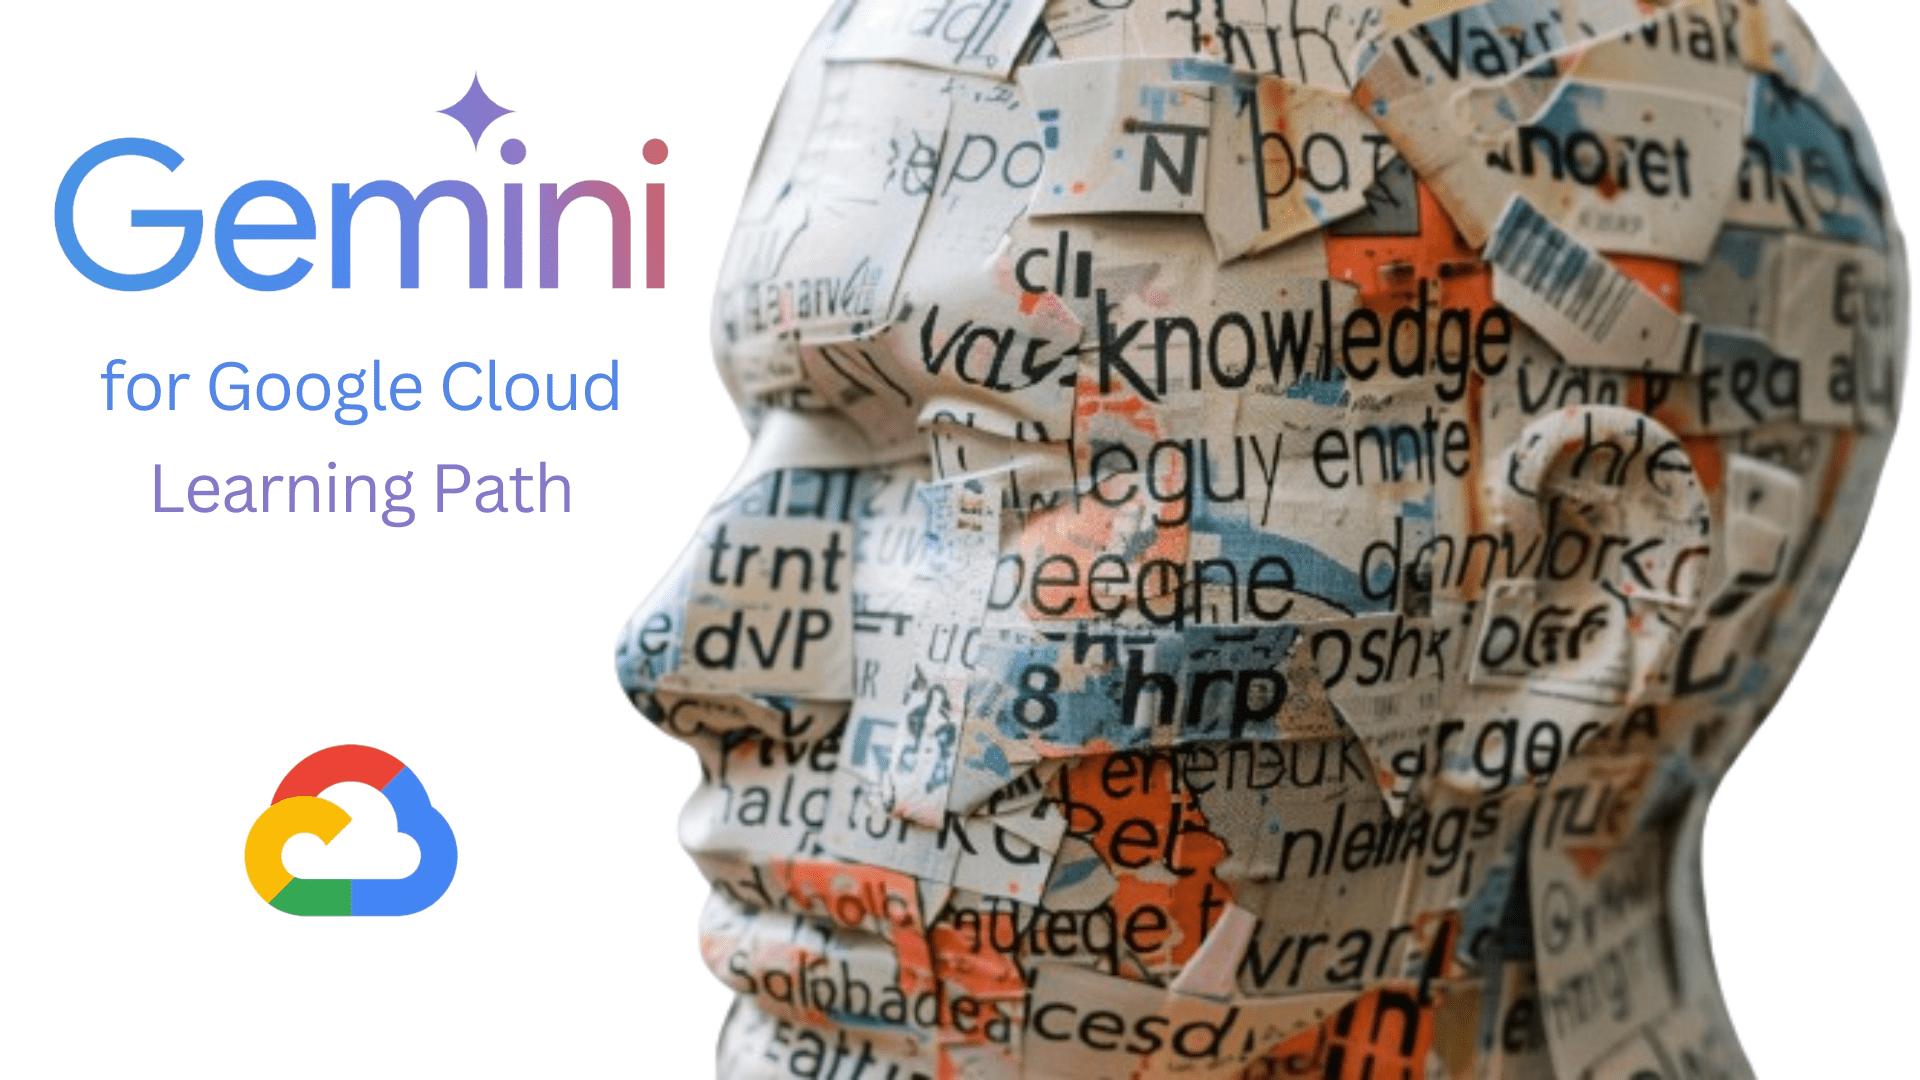 Free Google Cloud Learning Path for Gemini